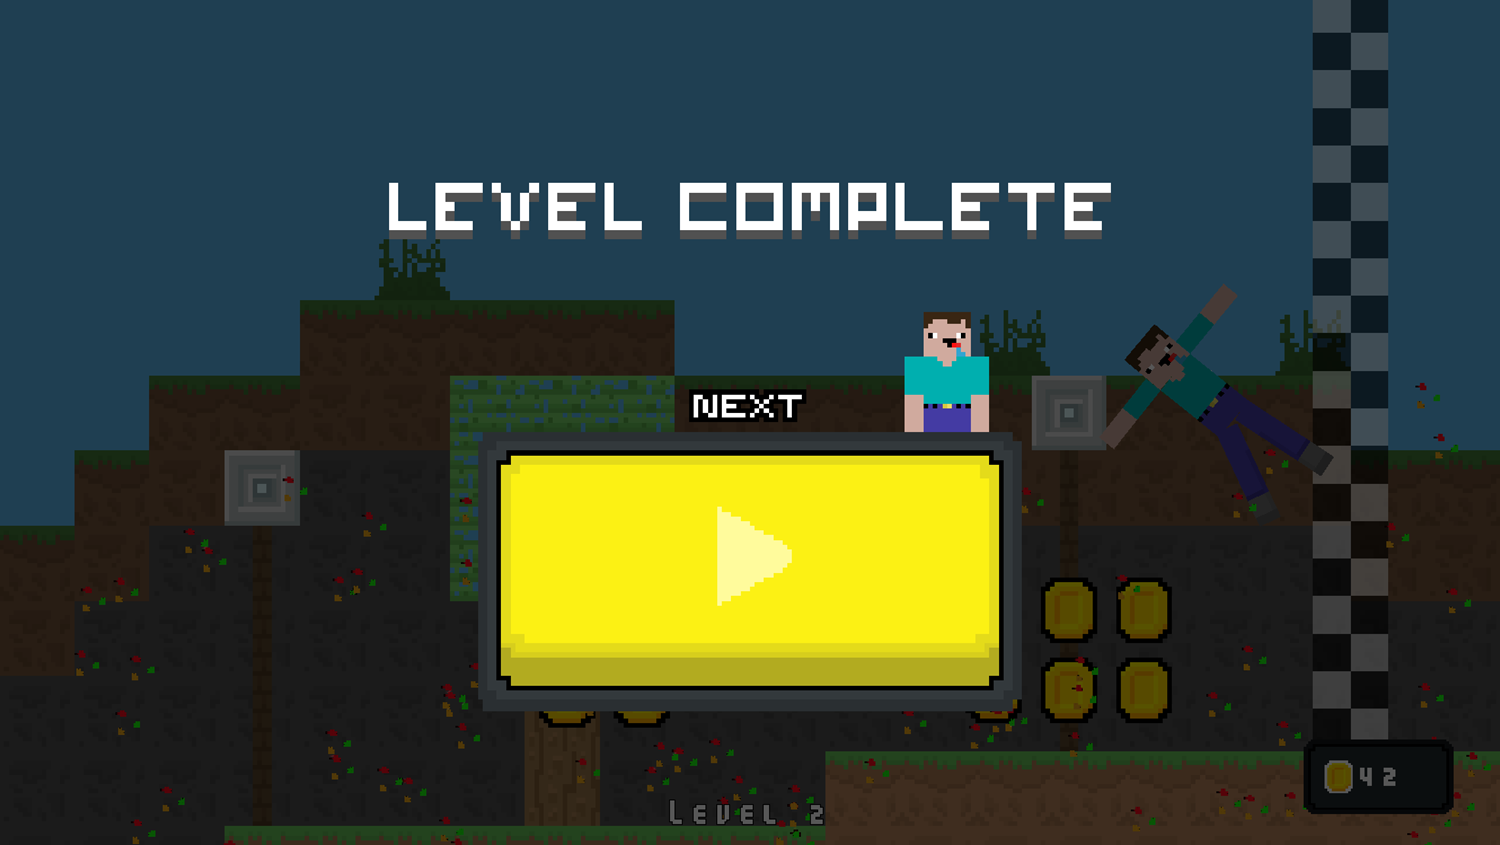 Spider Noob Game Level Complete Screen Screenshot.